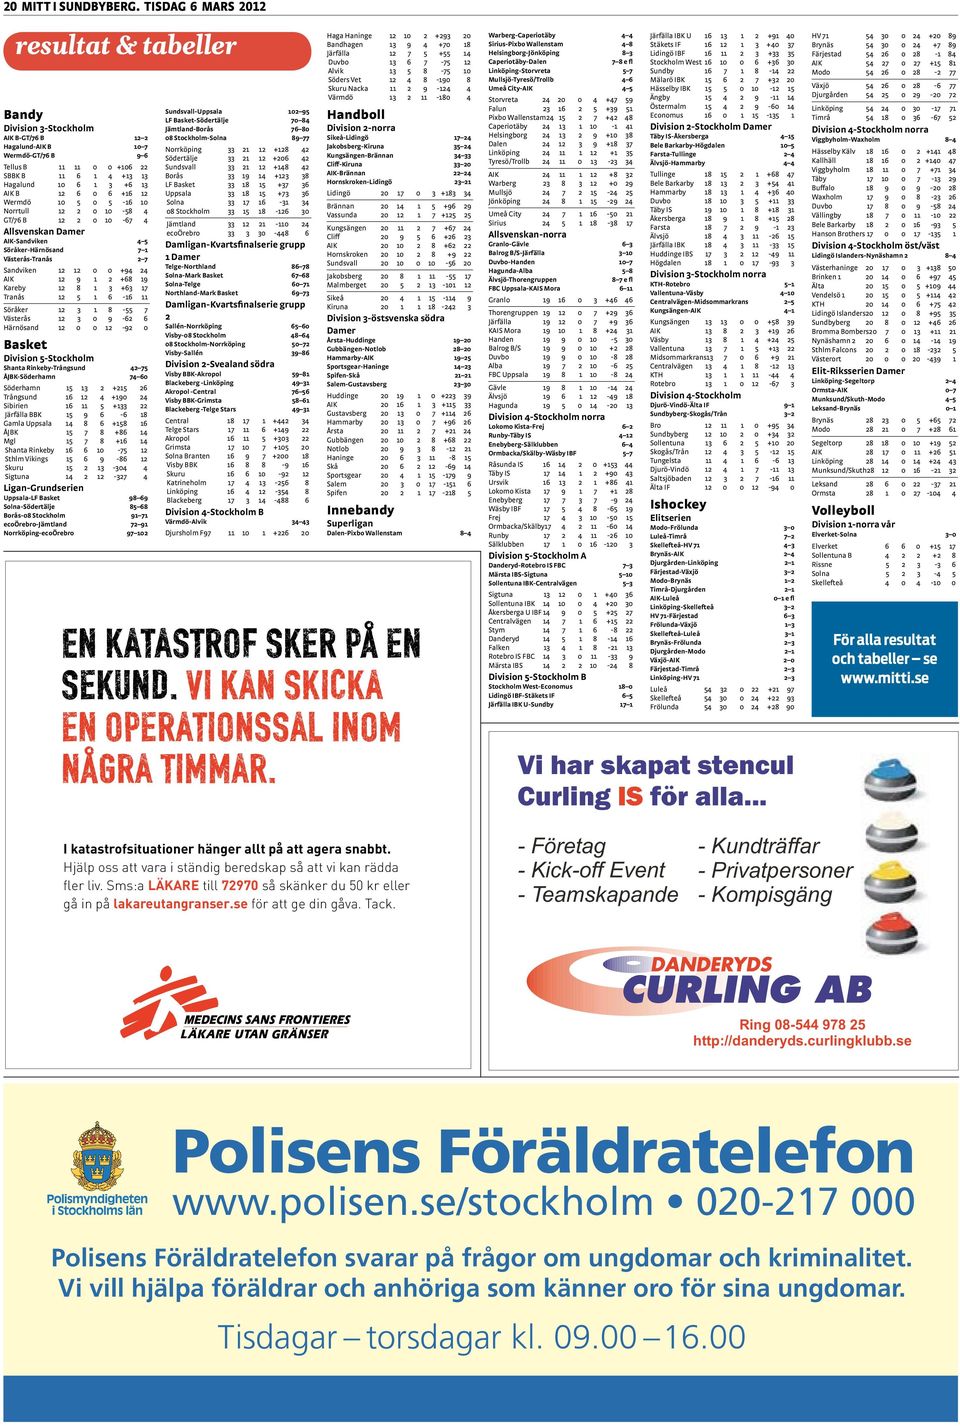 AIK B 12 6 0 6 +16 12 Wermdö 10 5 0 5-16 10 Norrtull 12 2 0 10-58 4 GT/76 B 12 2 0 10-67 4 Allsvenskan Damer AIK-Sandviken 4 5 Söråker-Härnösand 7 1 Västerås-Tranås 2 7 Sandviken 12 12 0 0 +94 24 AIK